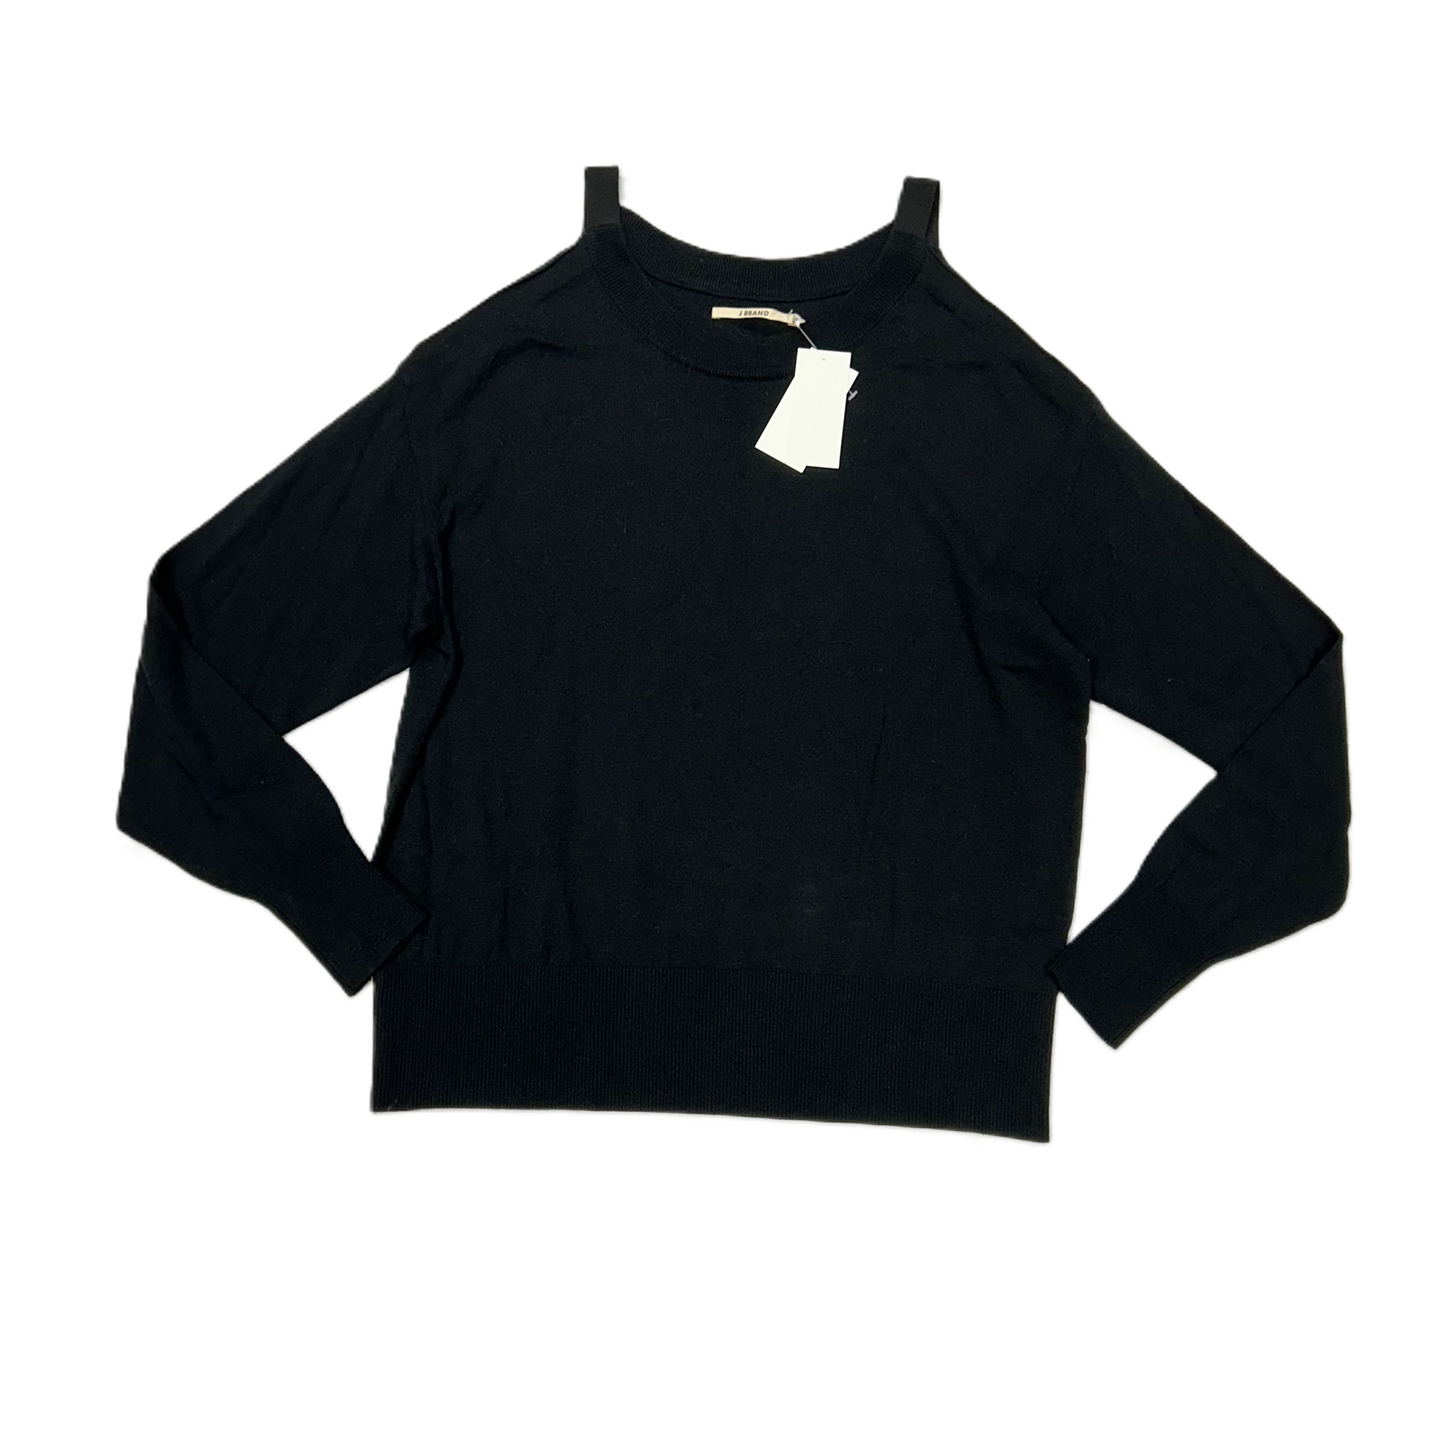 Sweater Designer By J Brand  Size: M